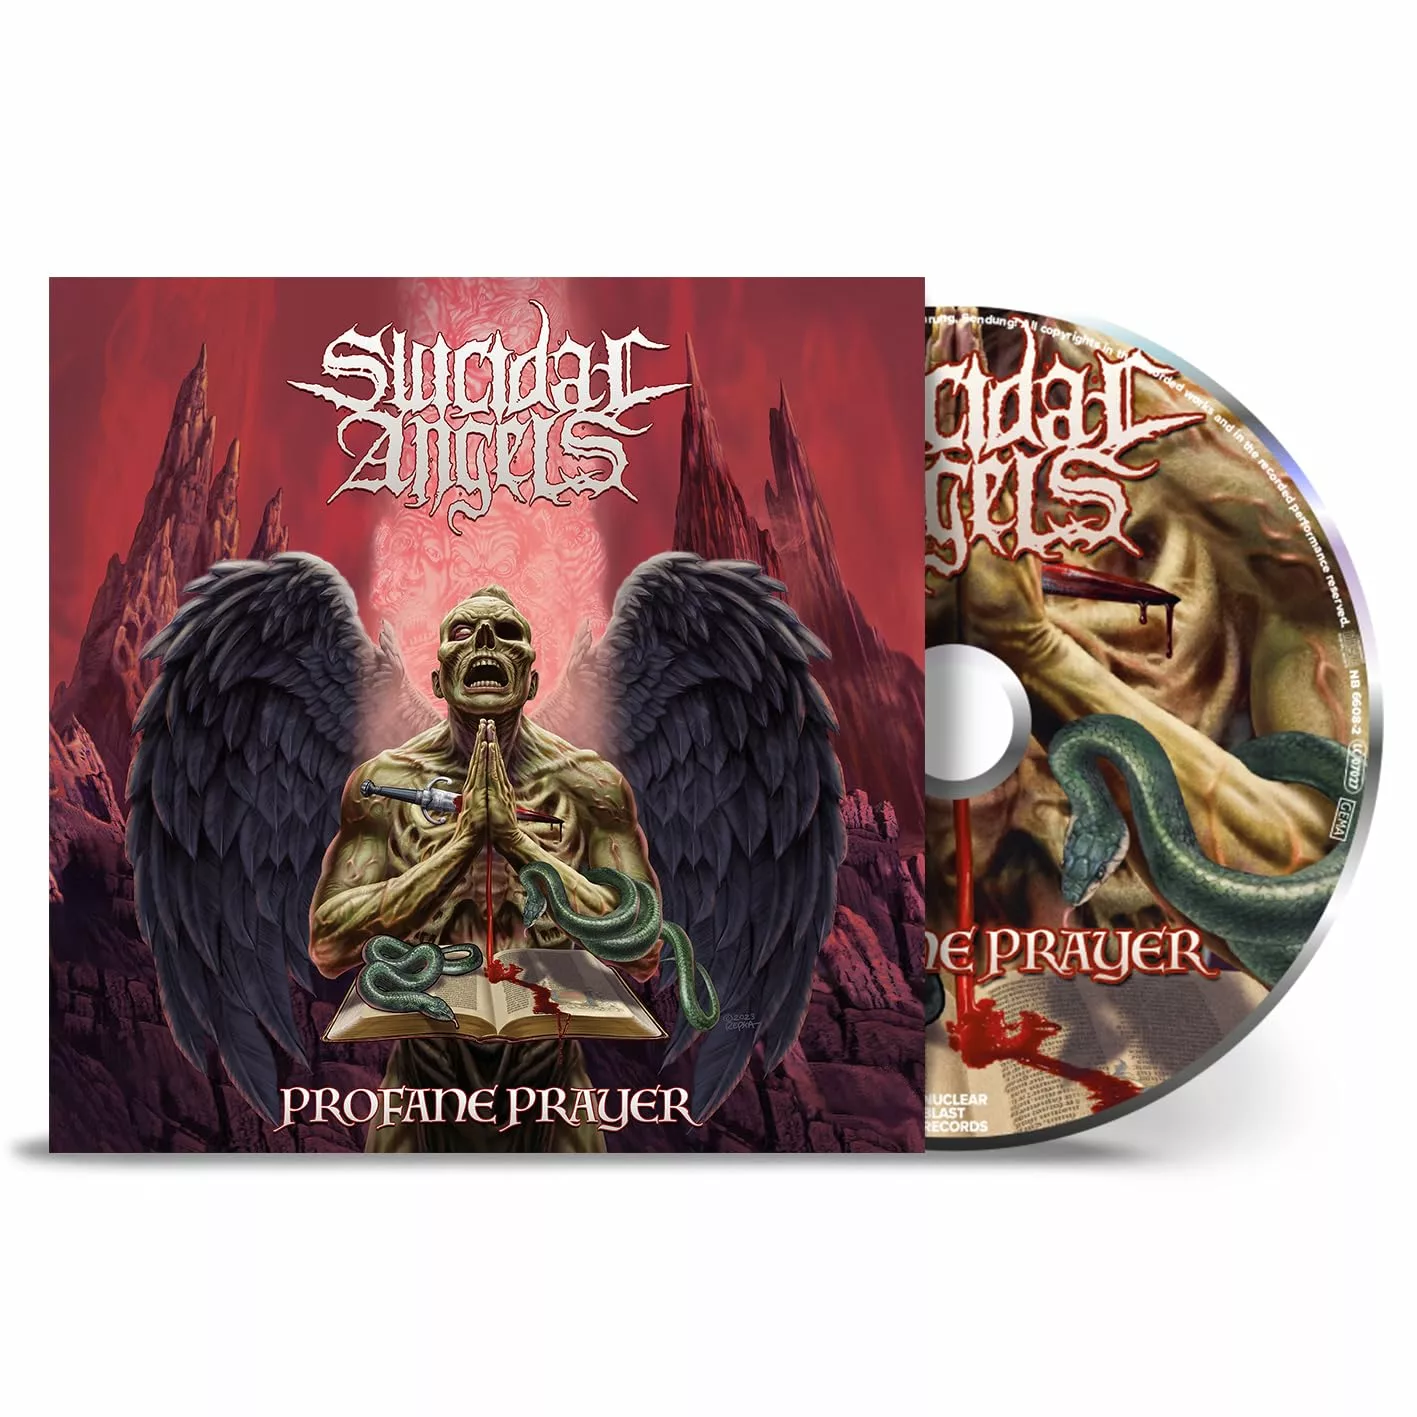 SUICIDAL ANGELS - Profane Prayer [CD]